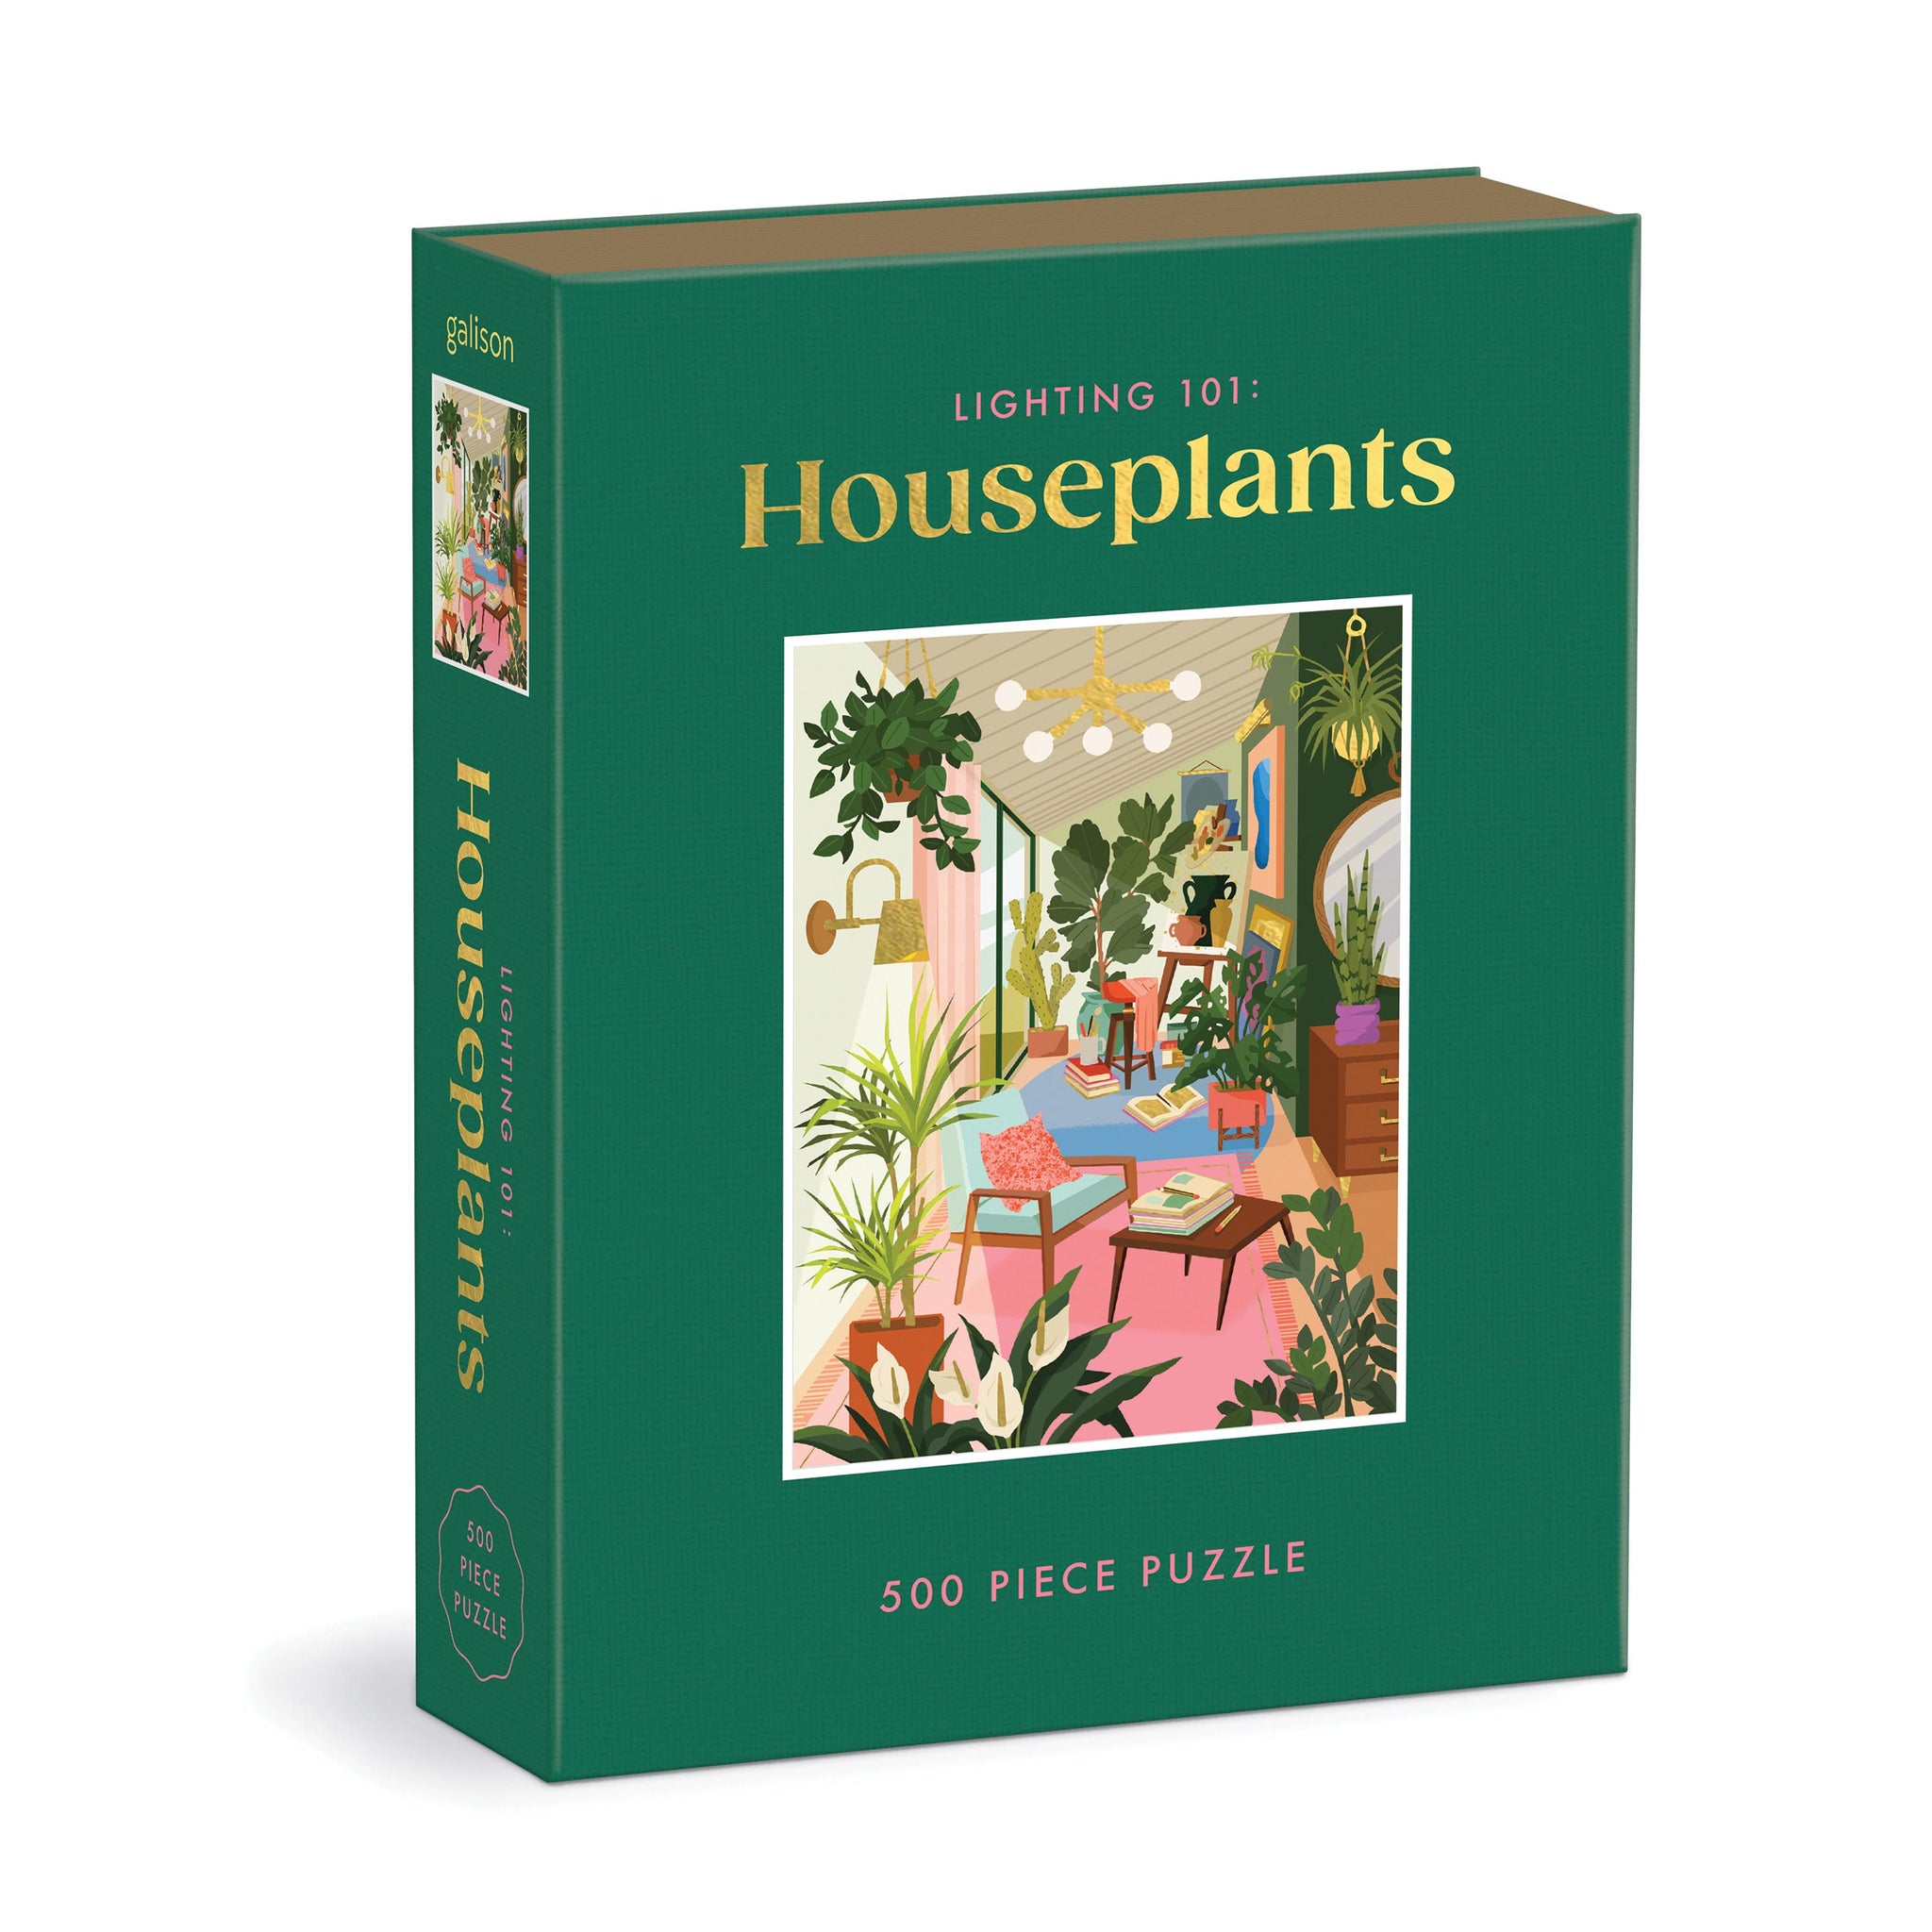 Lighting 101: Houseplants - Book Puzzle